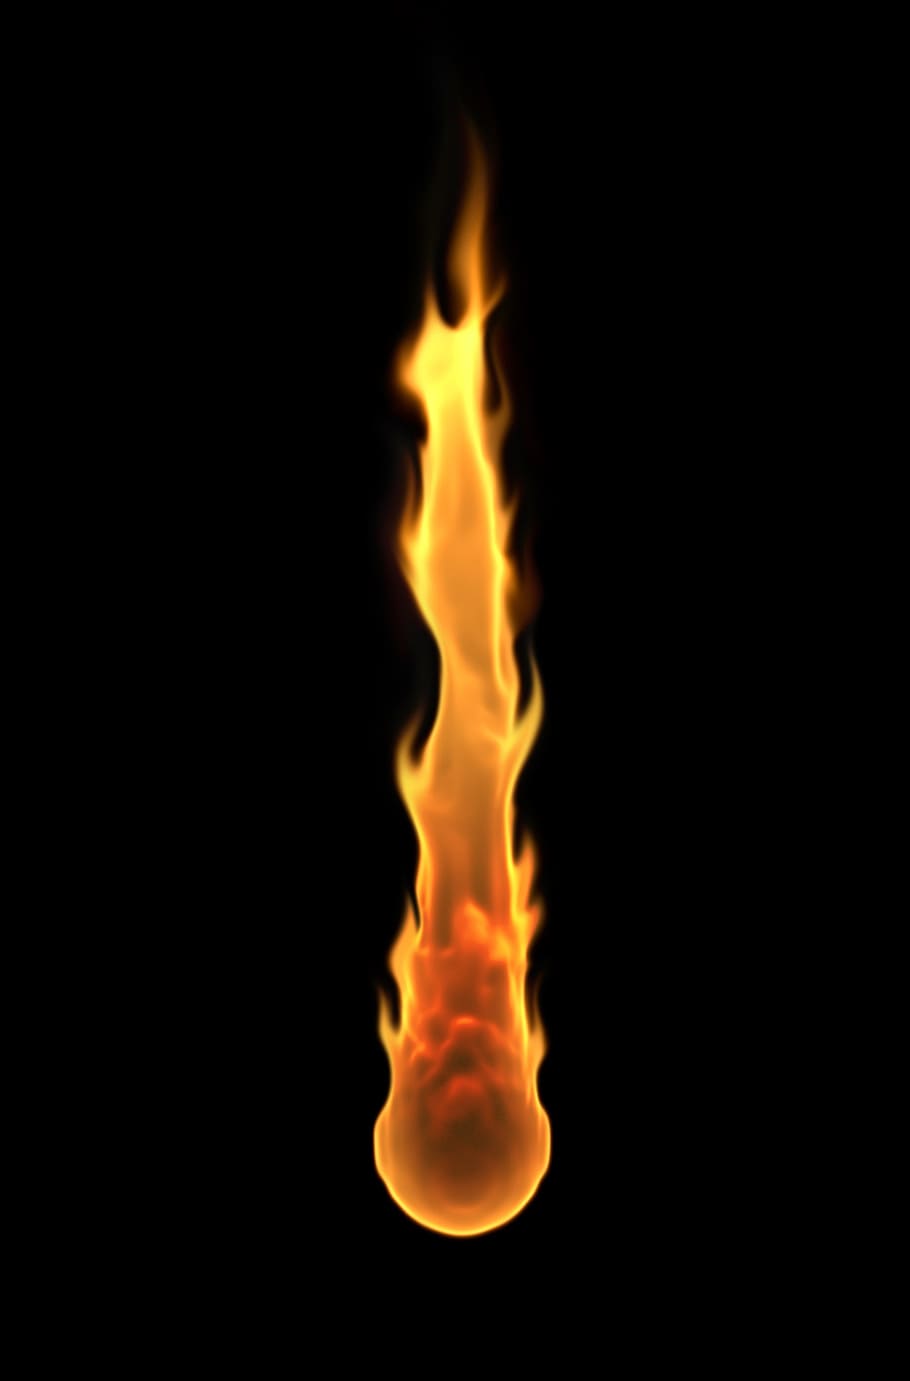 flame, fire, meteorite, fiery, burning, burn, light, black background, fire - natural phenomenon, heat - temperature